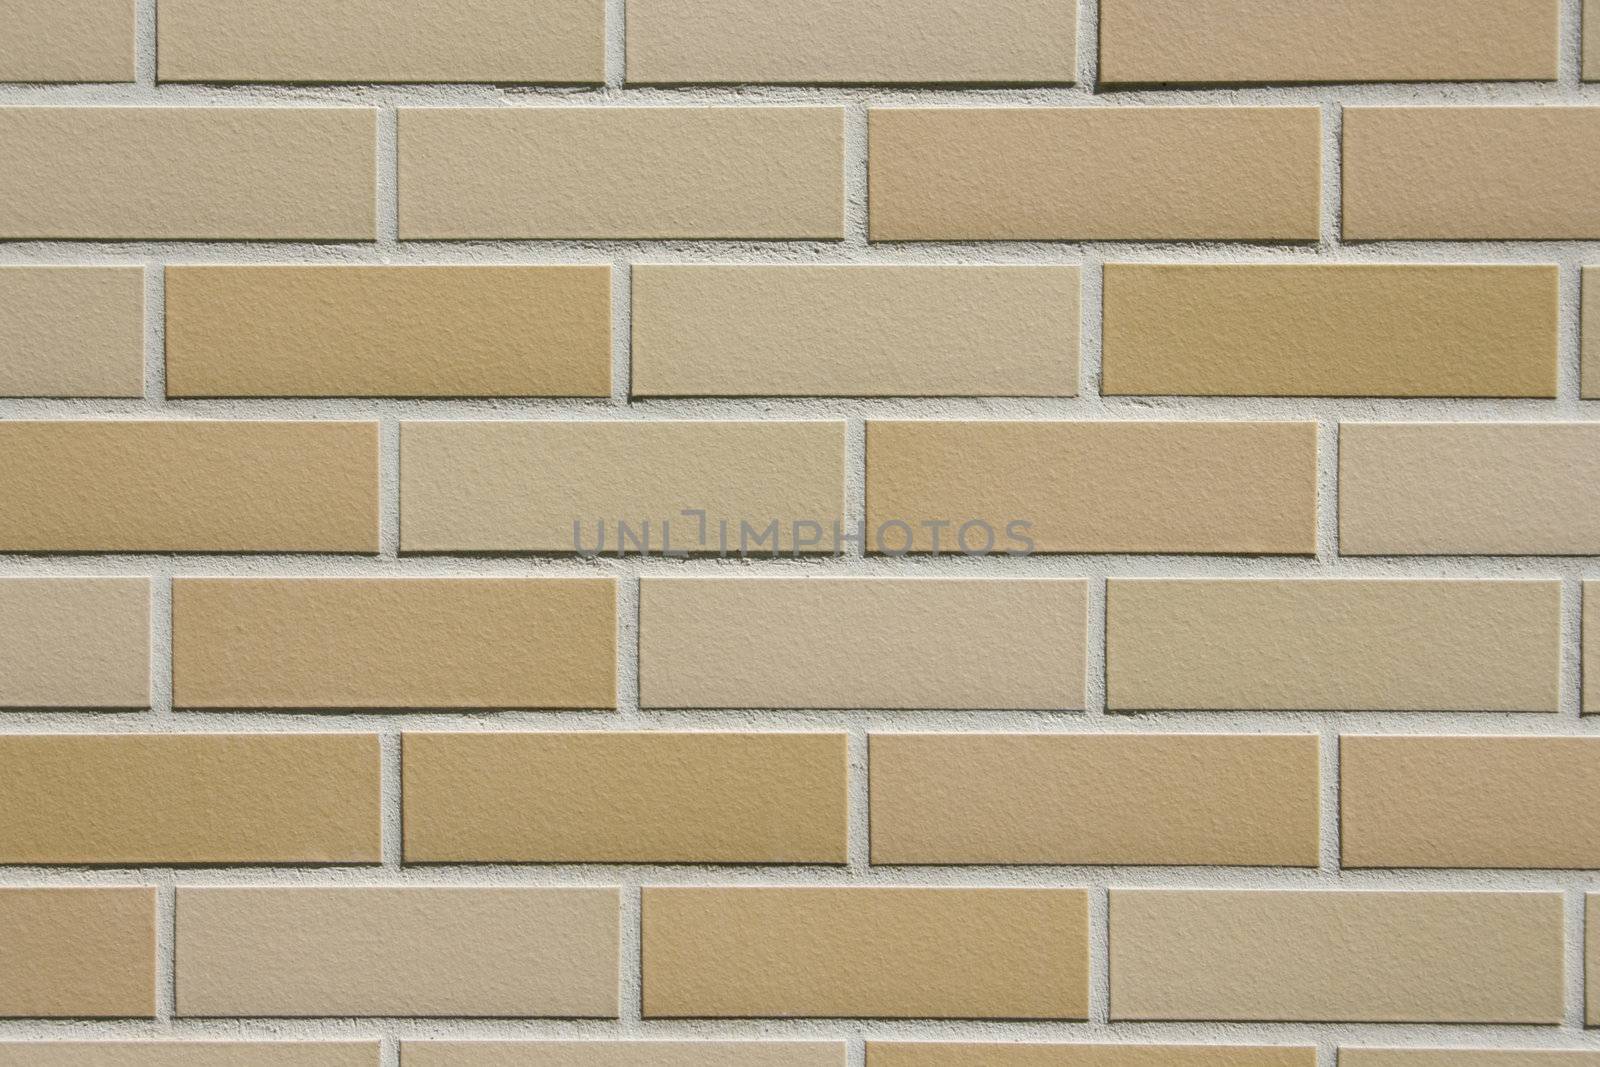 Clinker brick wall by Teamarbeit